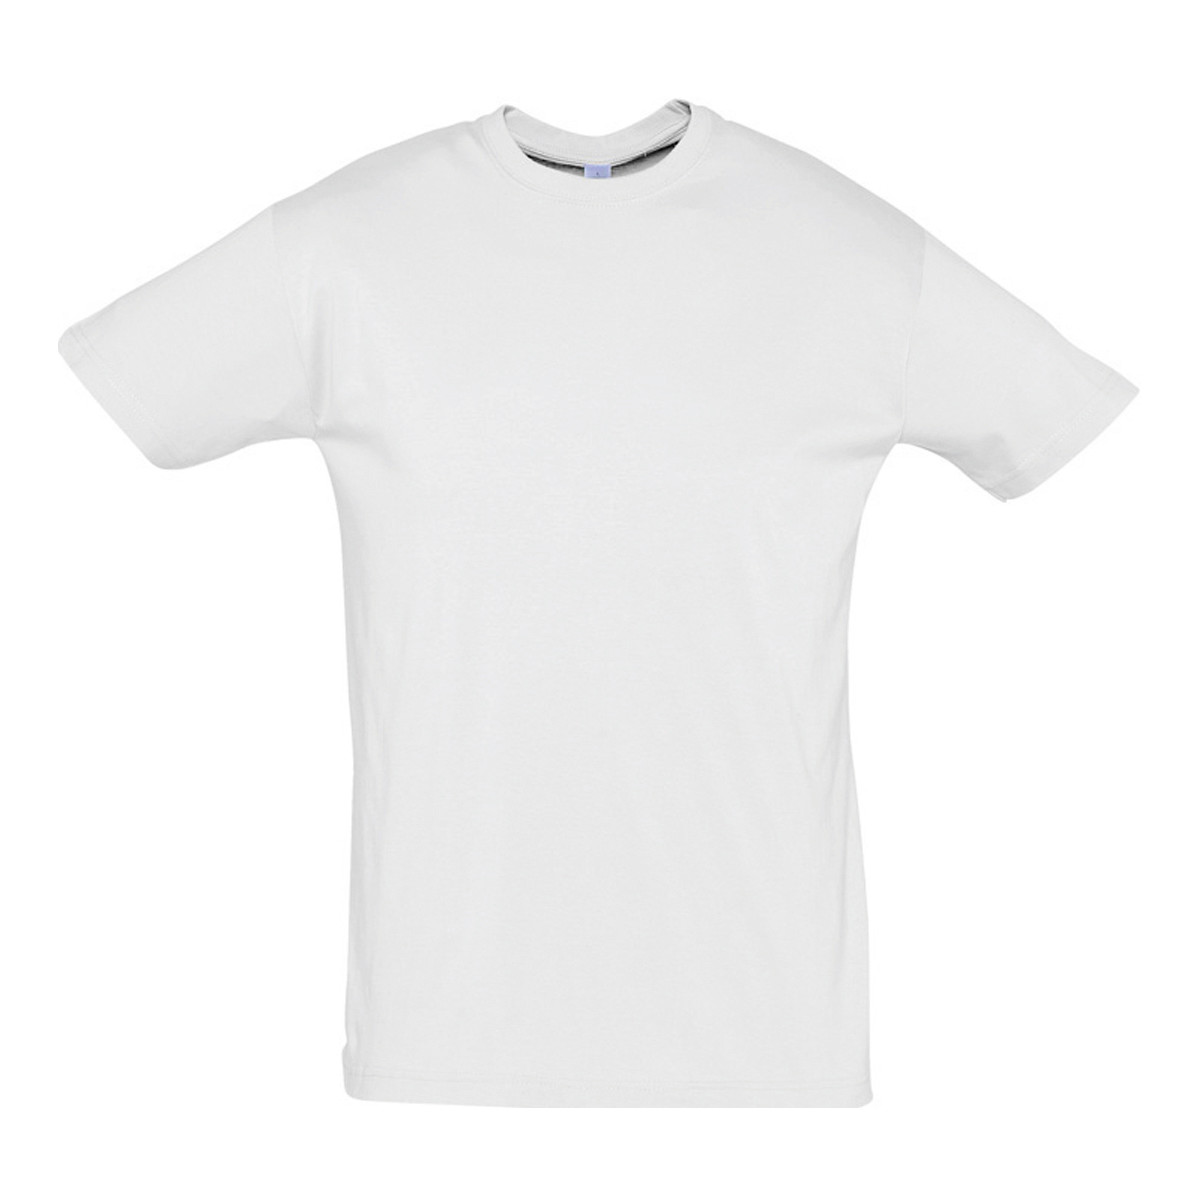 textil Camisetas manga corta Sols REGENT COLORS MEN Blanco